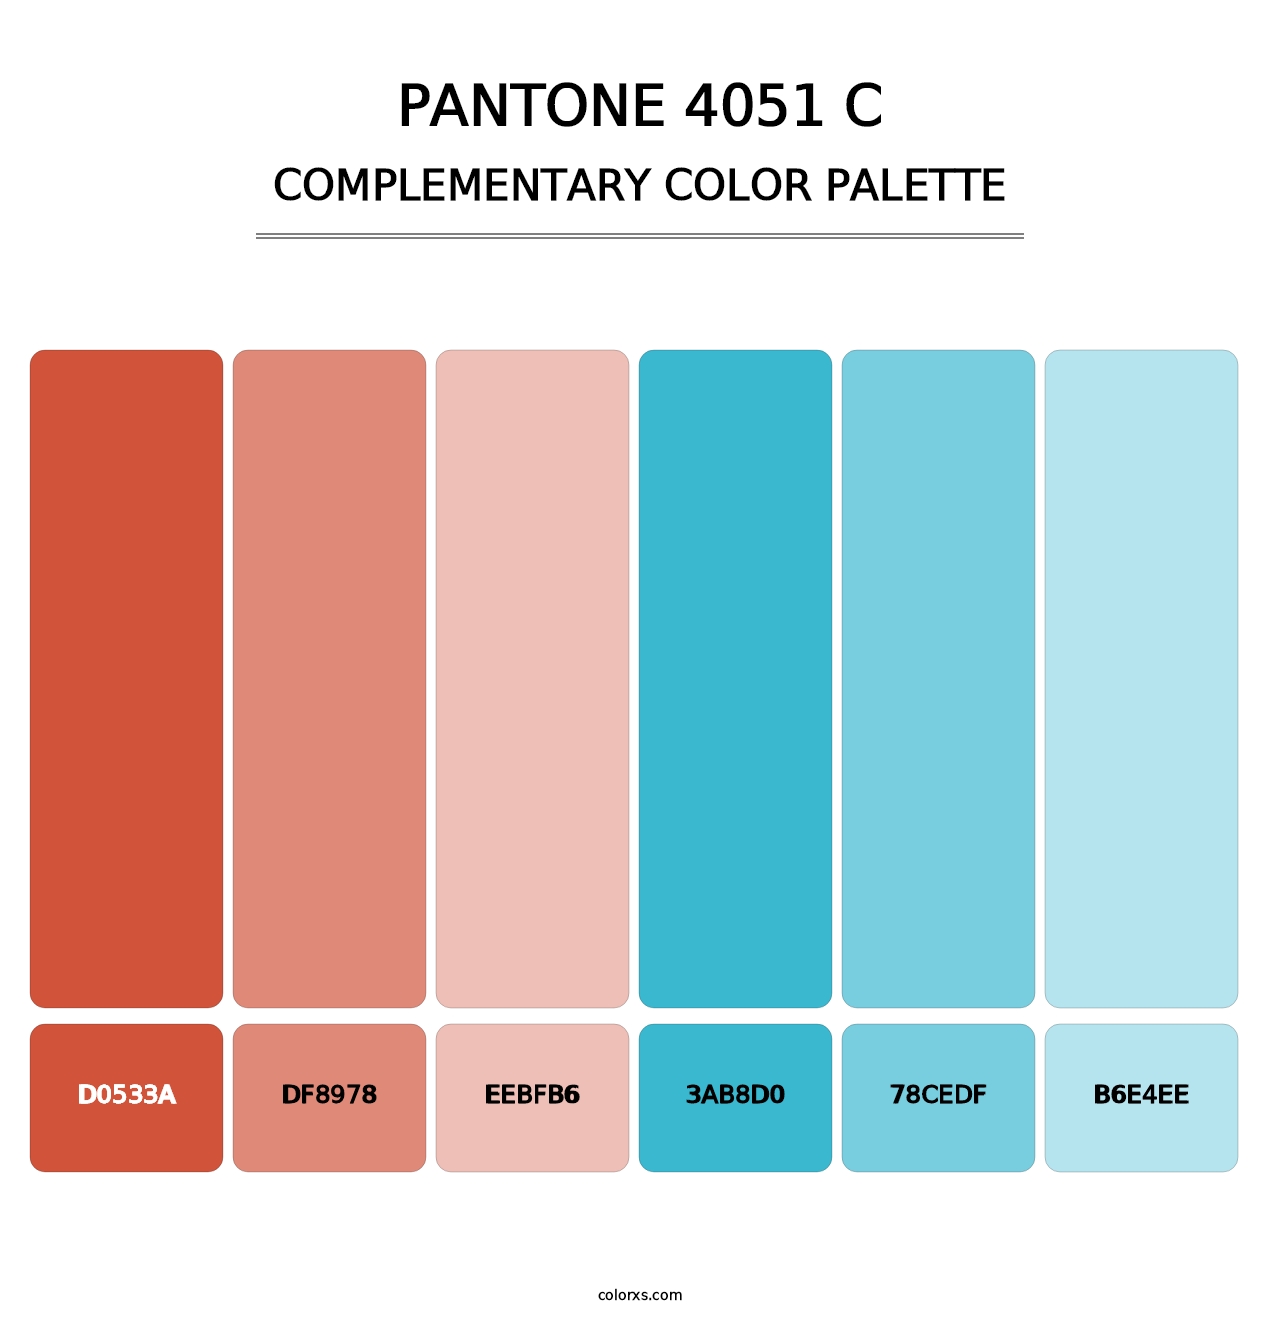 PANTONE 4051 C - Complementary Color Palette